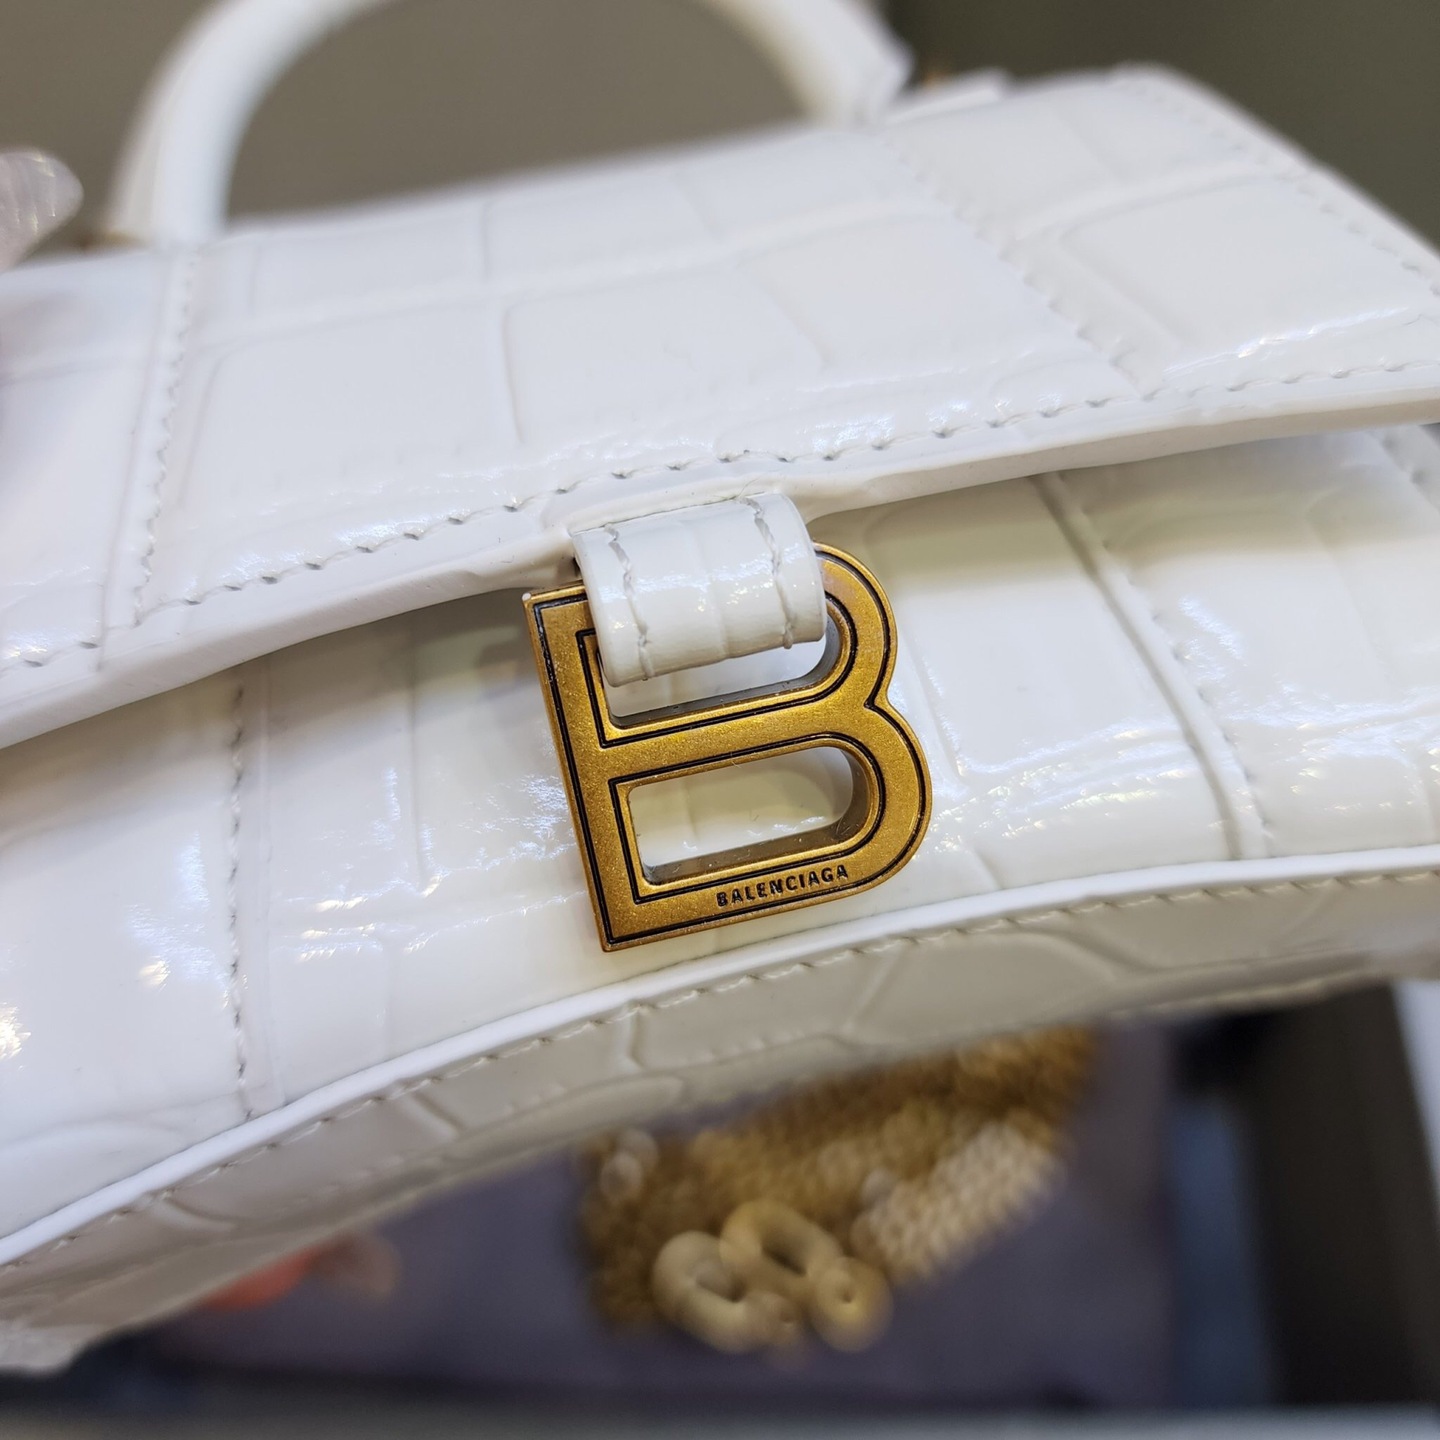 Balenciaga Hourglass top handle bag review  Bay Area Fashionista